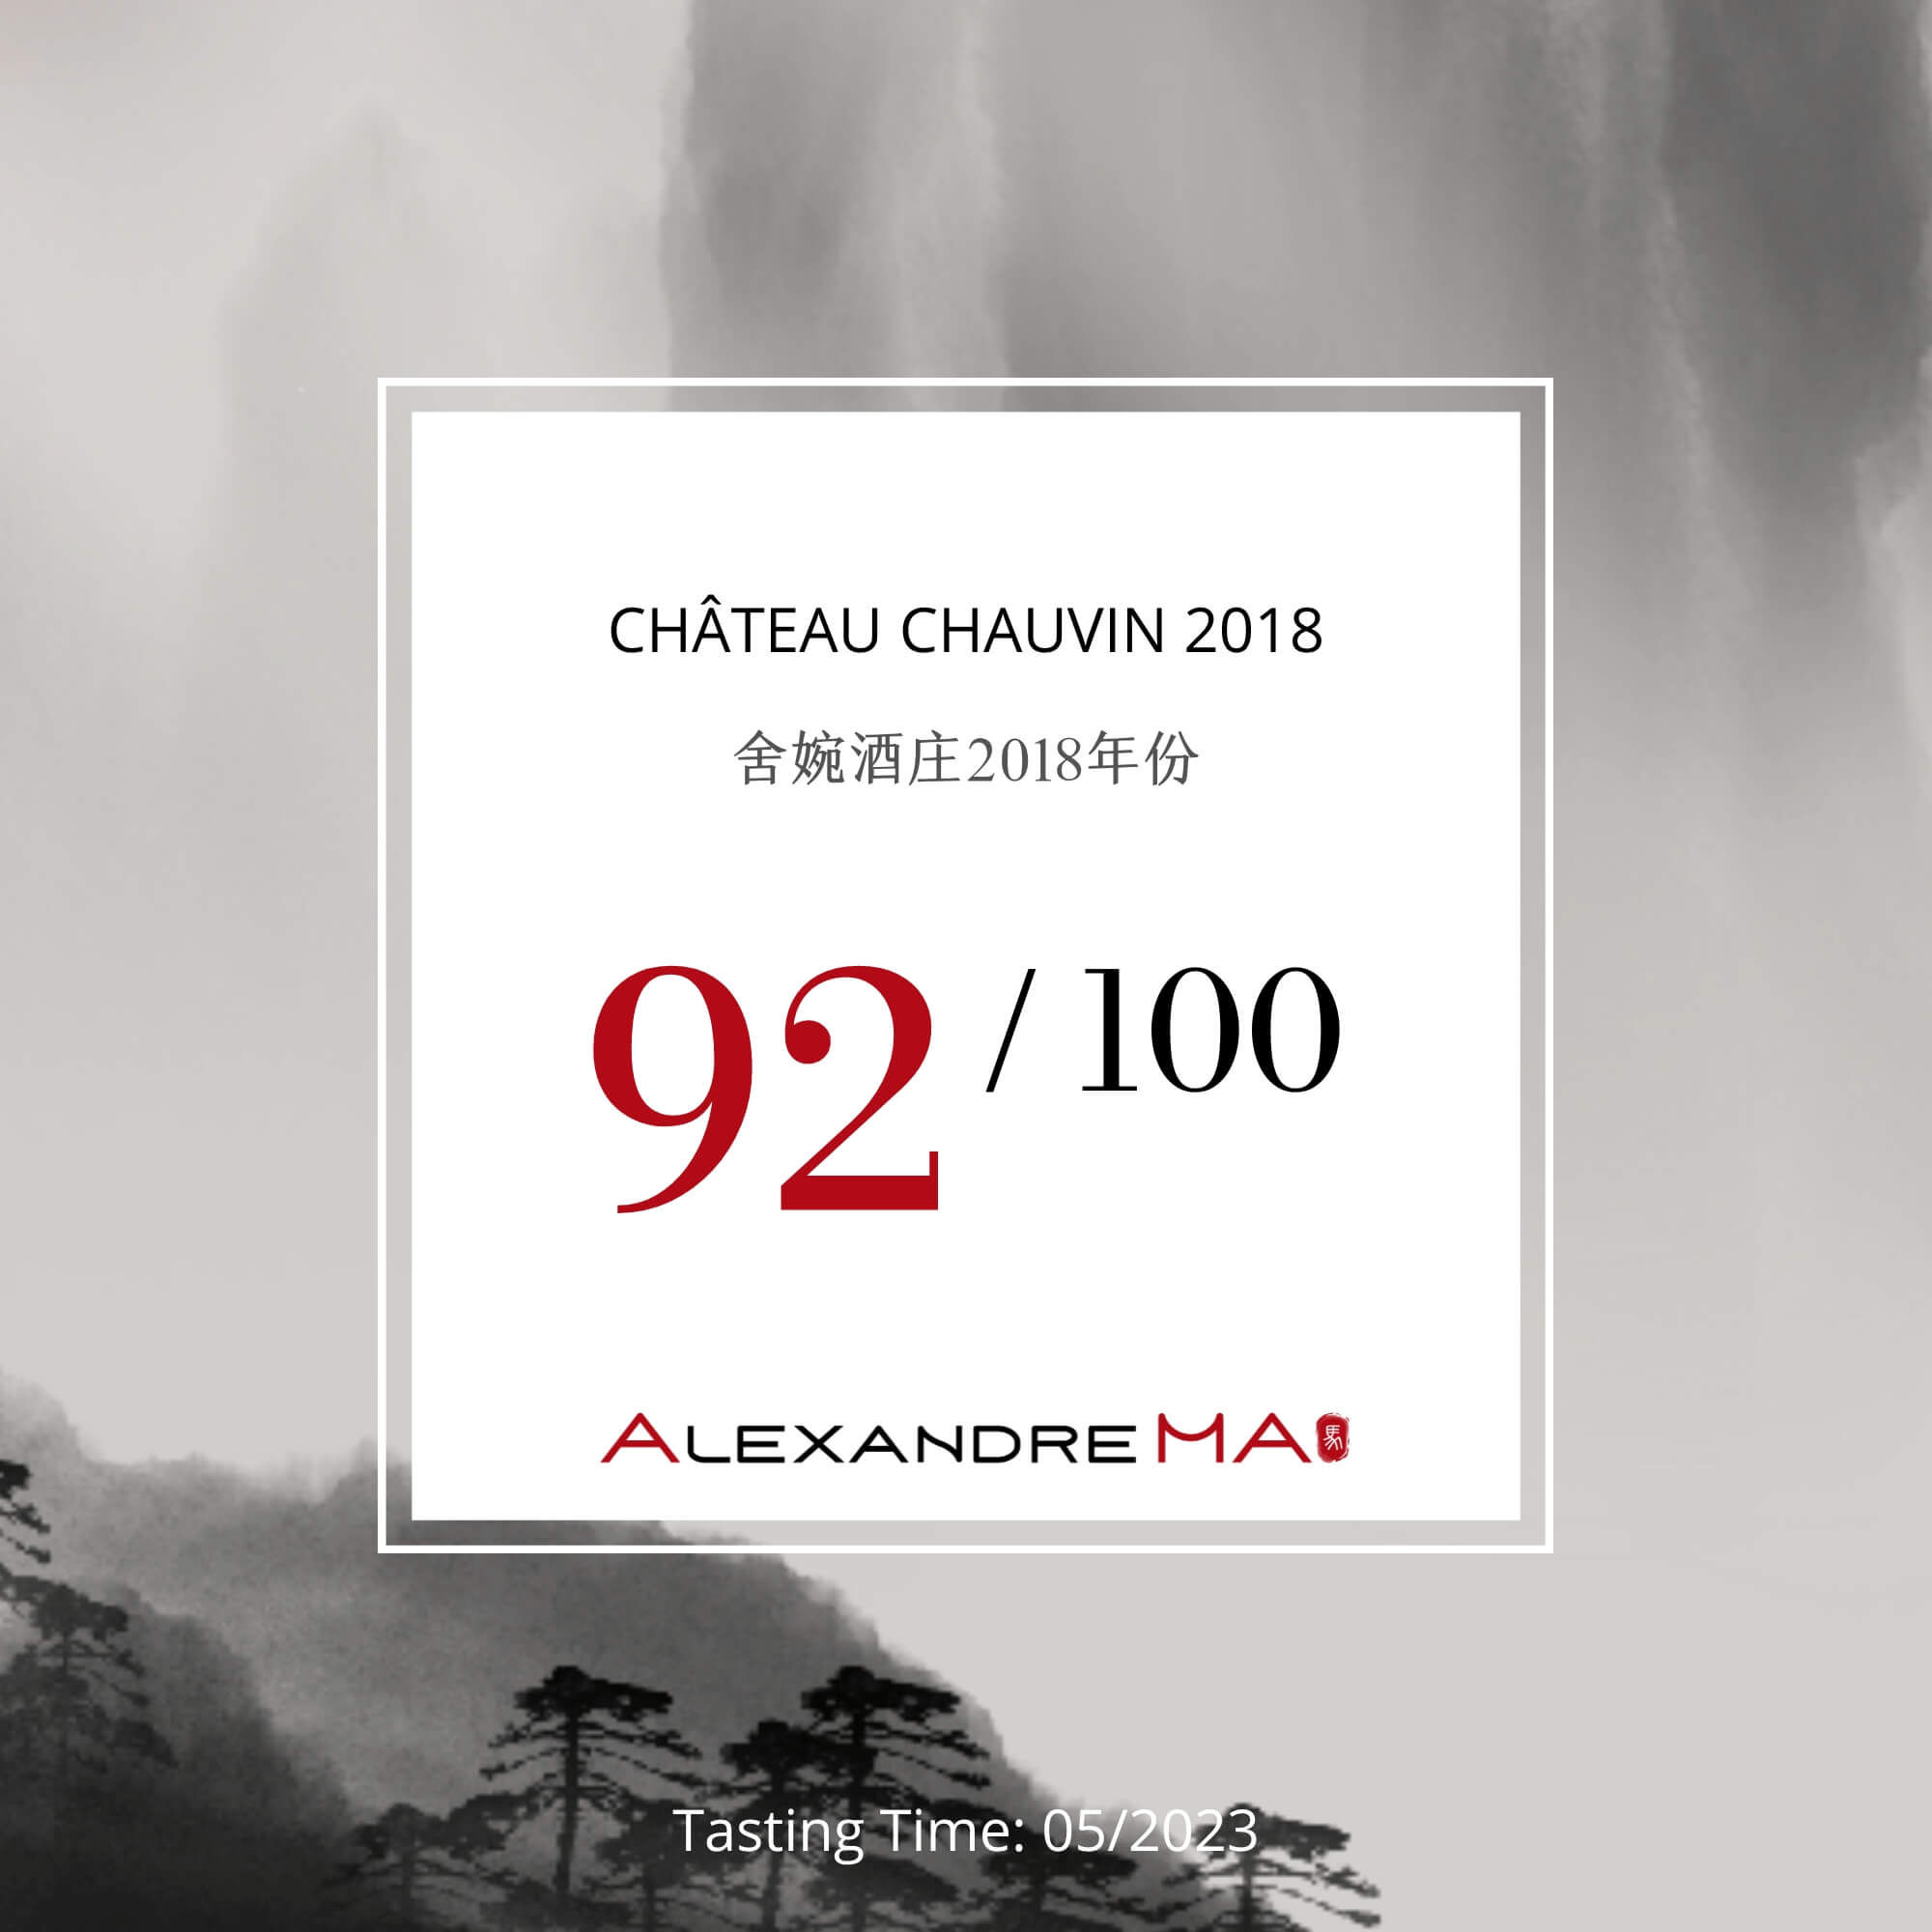 Château Chauvin 2018 - Alexandre MA